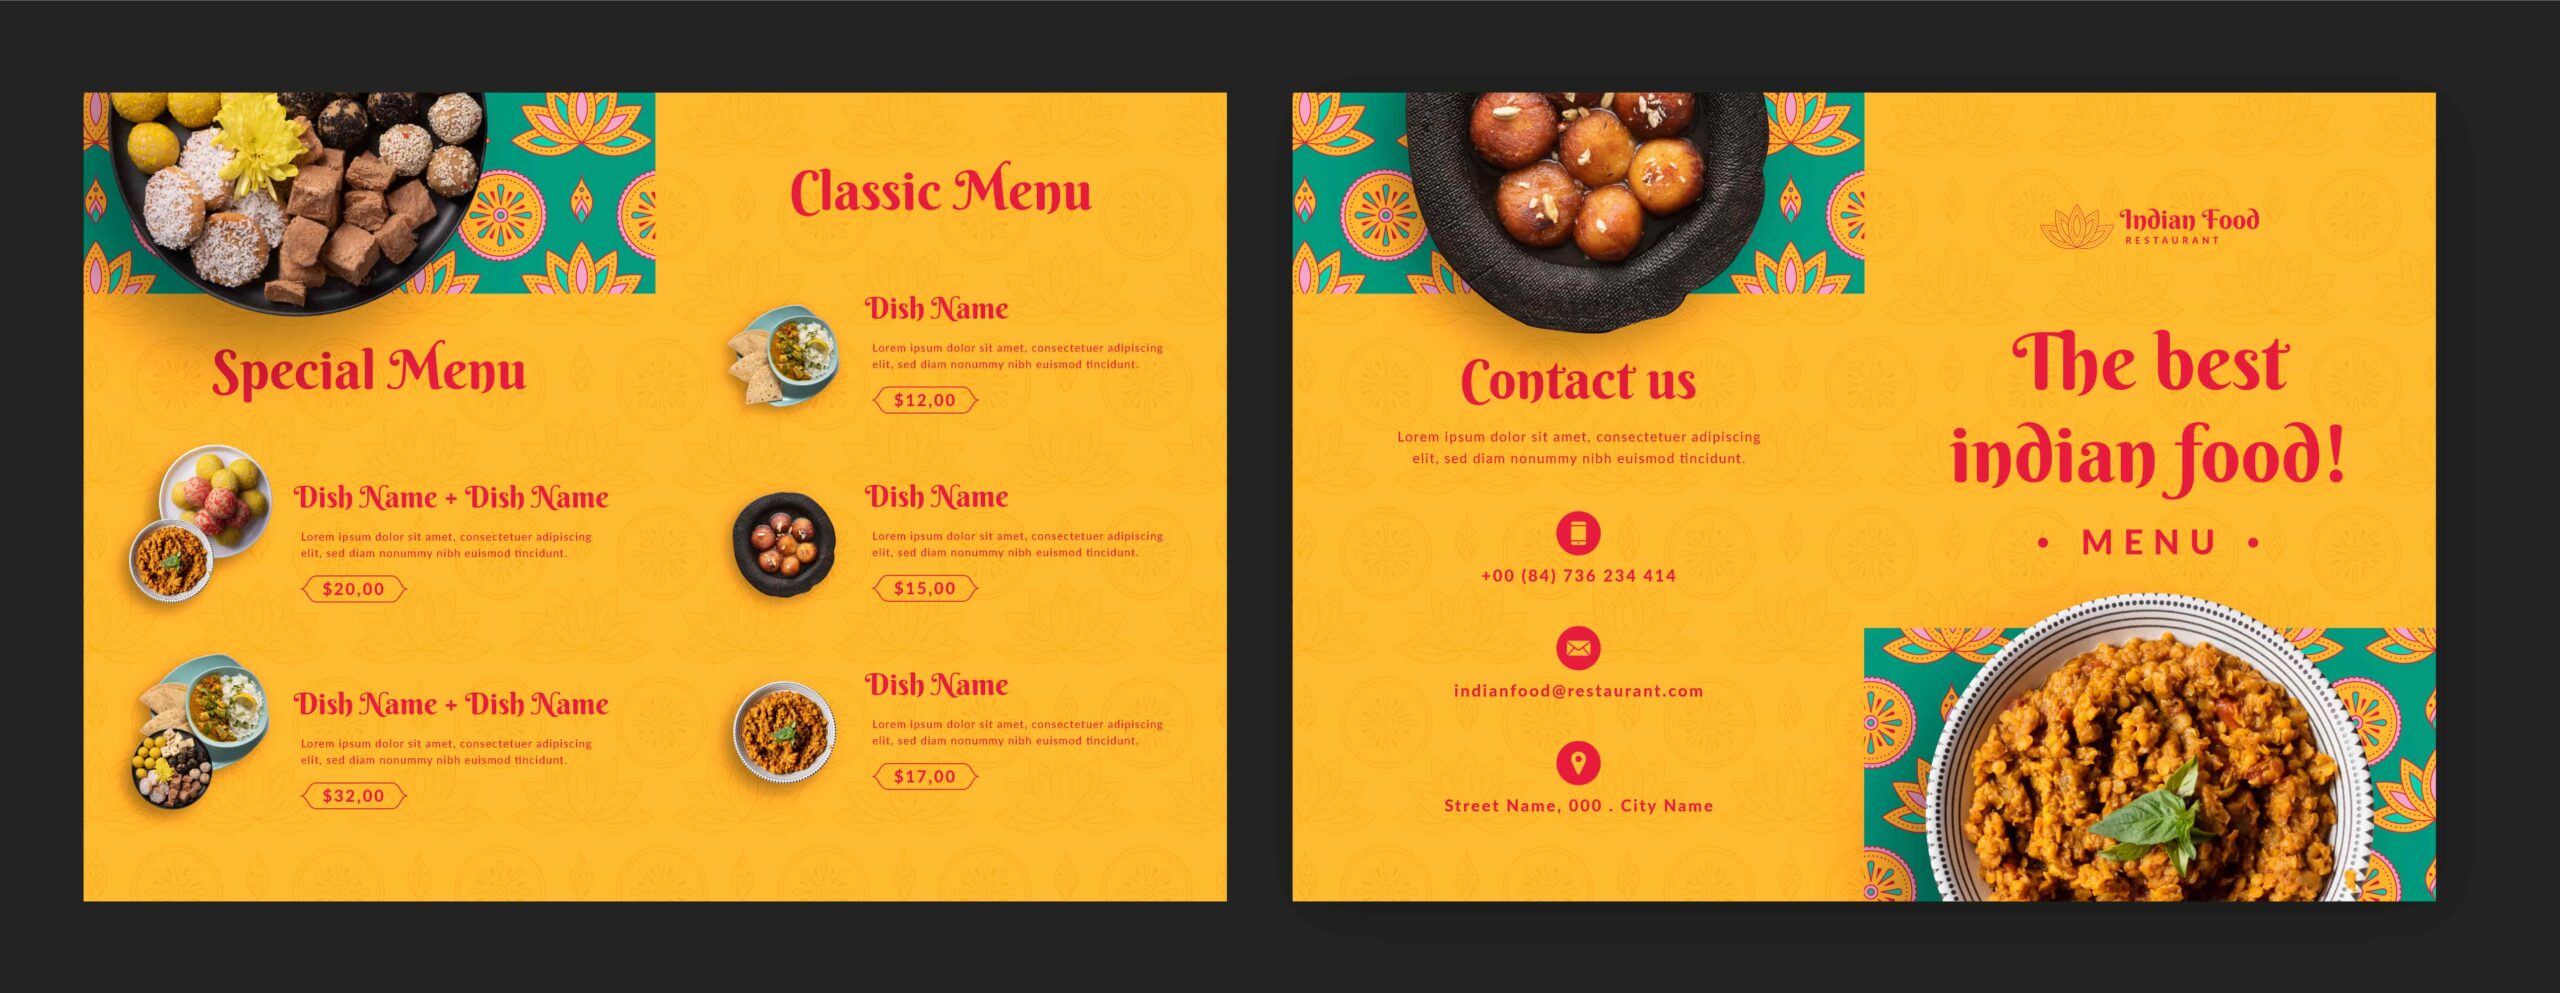 What should a restaurant menu look like